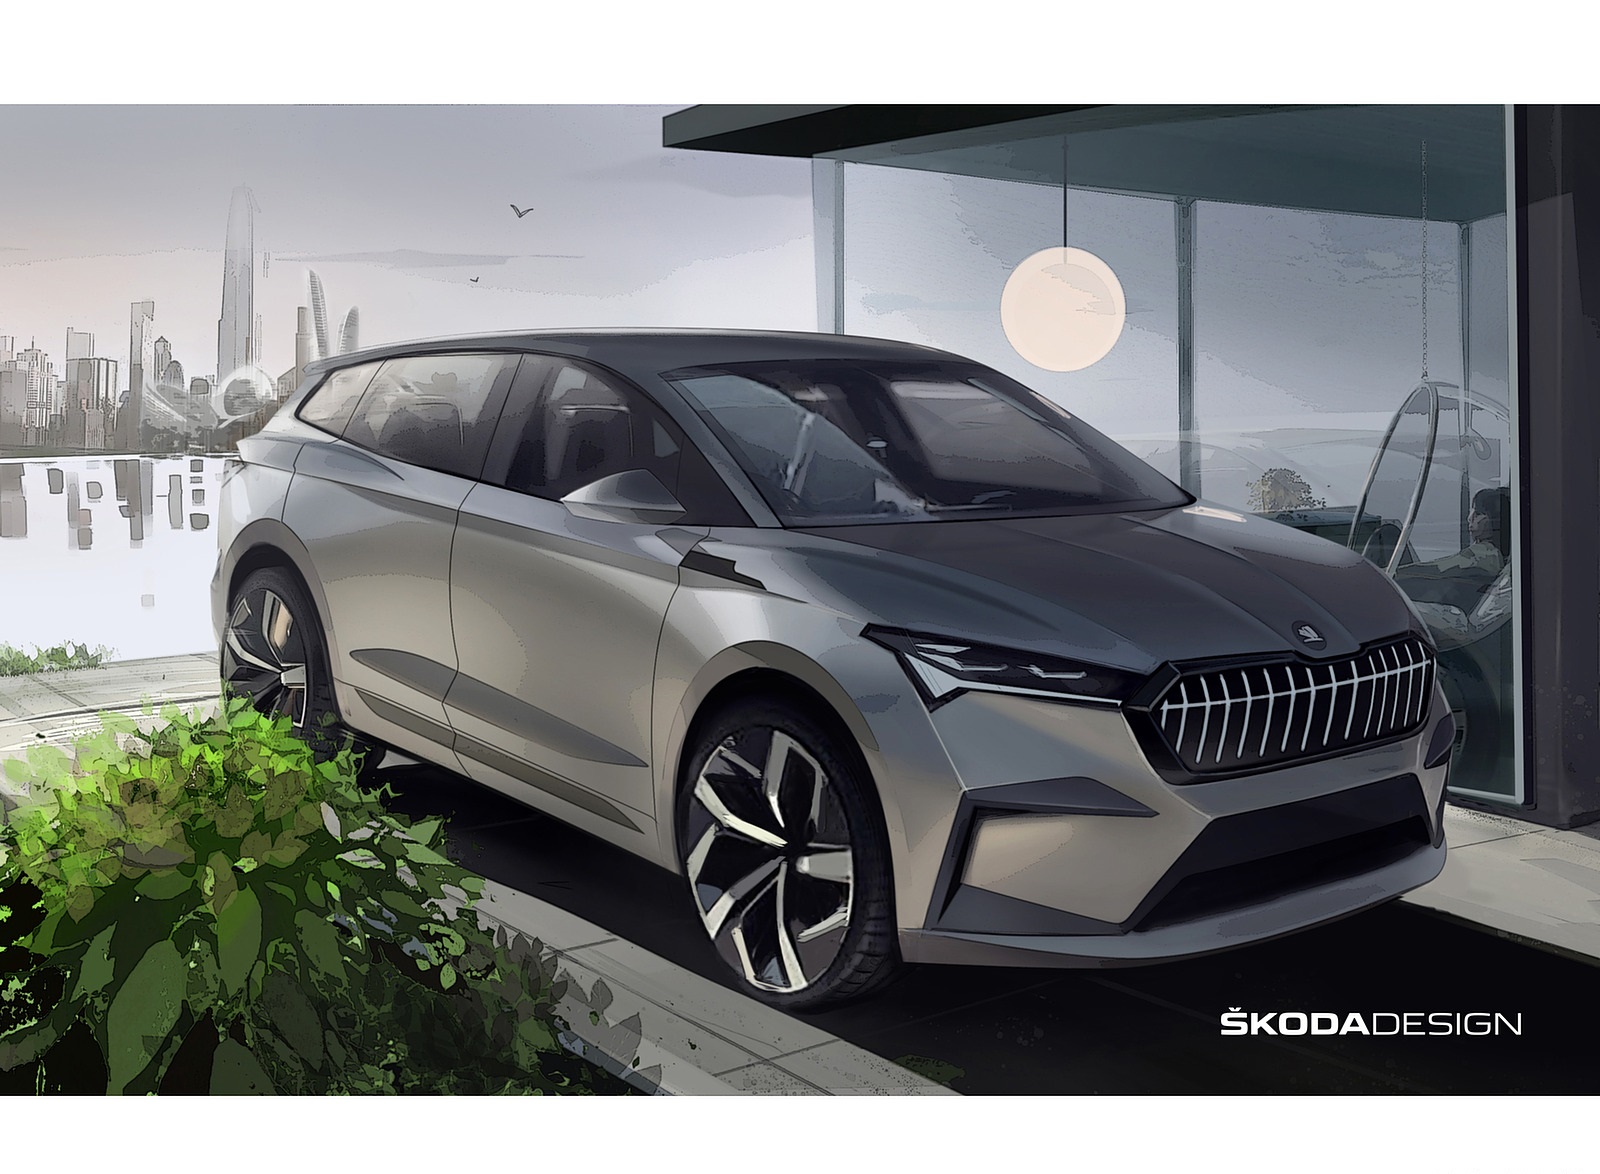 2021 Škoda ENYAQ iV Design Sketch Wallpapers #155 of 184